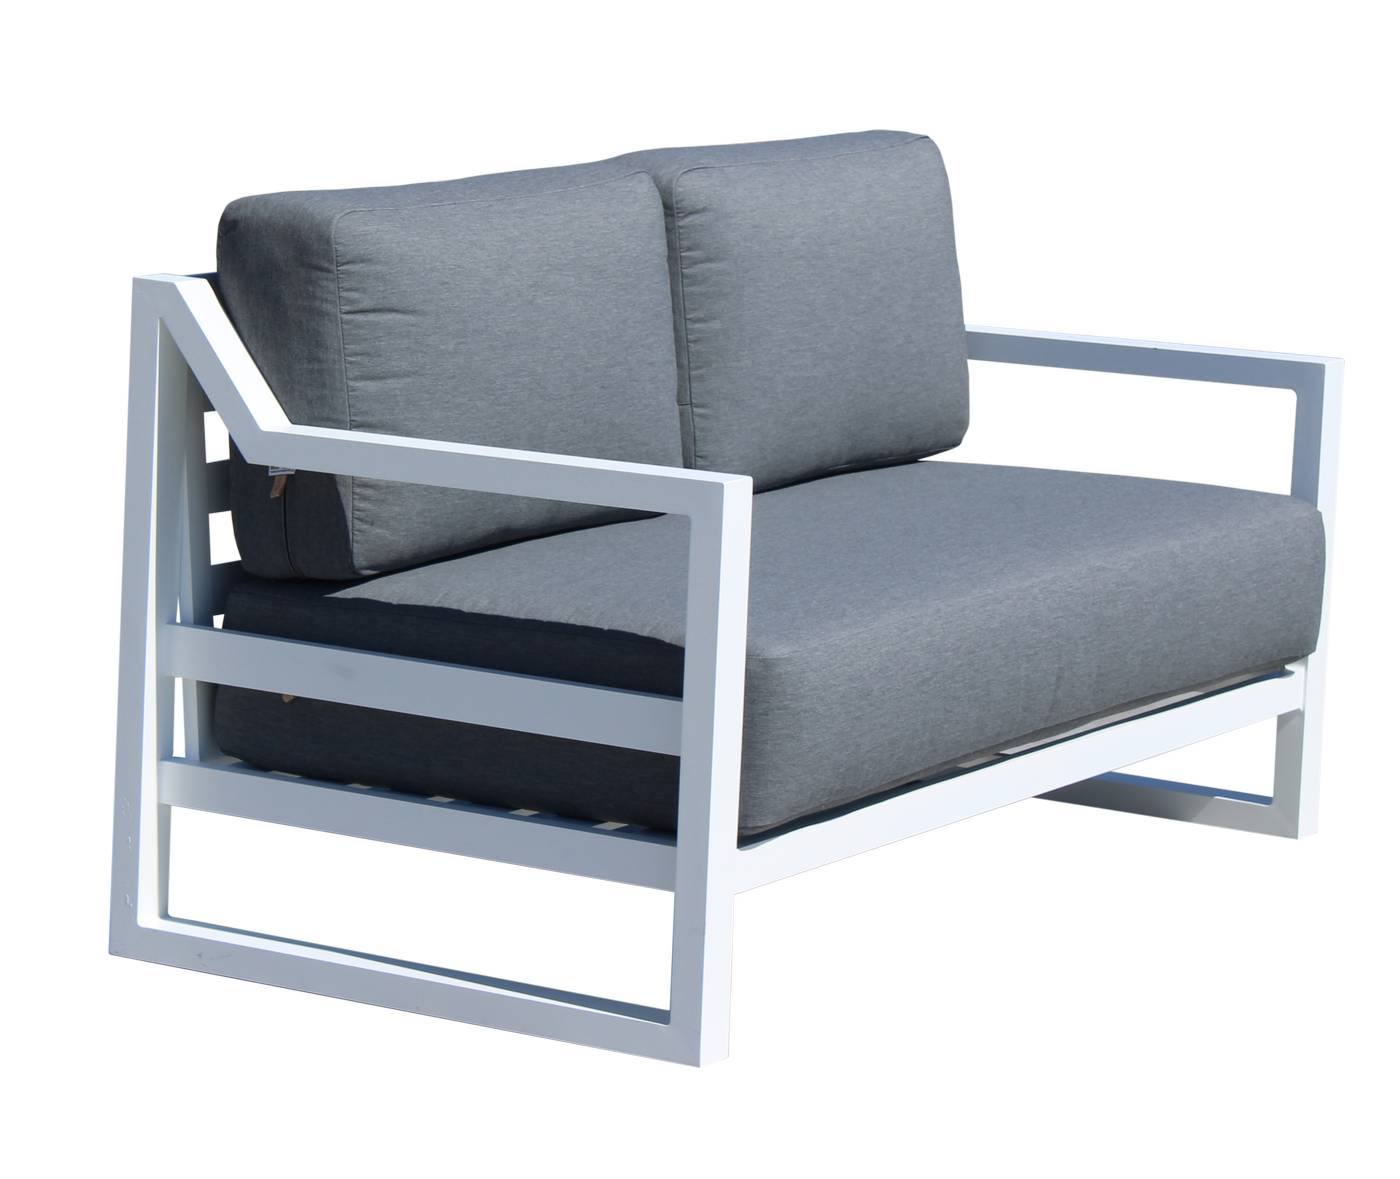 Set Aluminio Luxe Dublian-7 - Lujoso conjunto de aluminio: sofá 2 plazas + 2 sillones + mesa de centro. Color conjunto: blanco, antracita, champagne, plata o marrón.